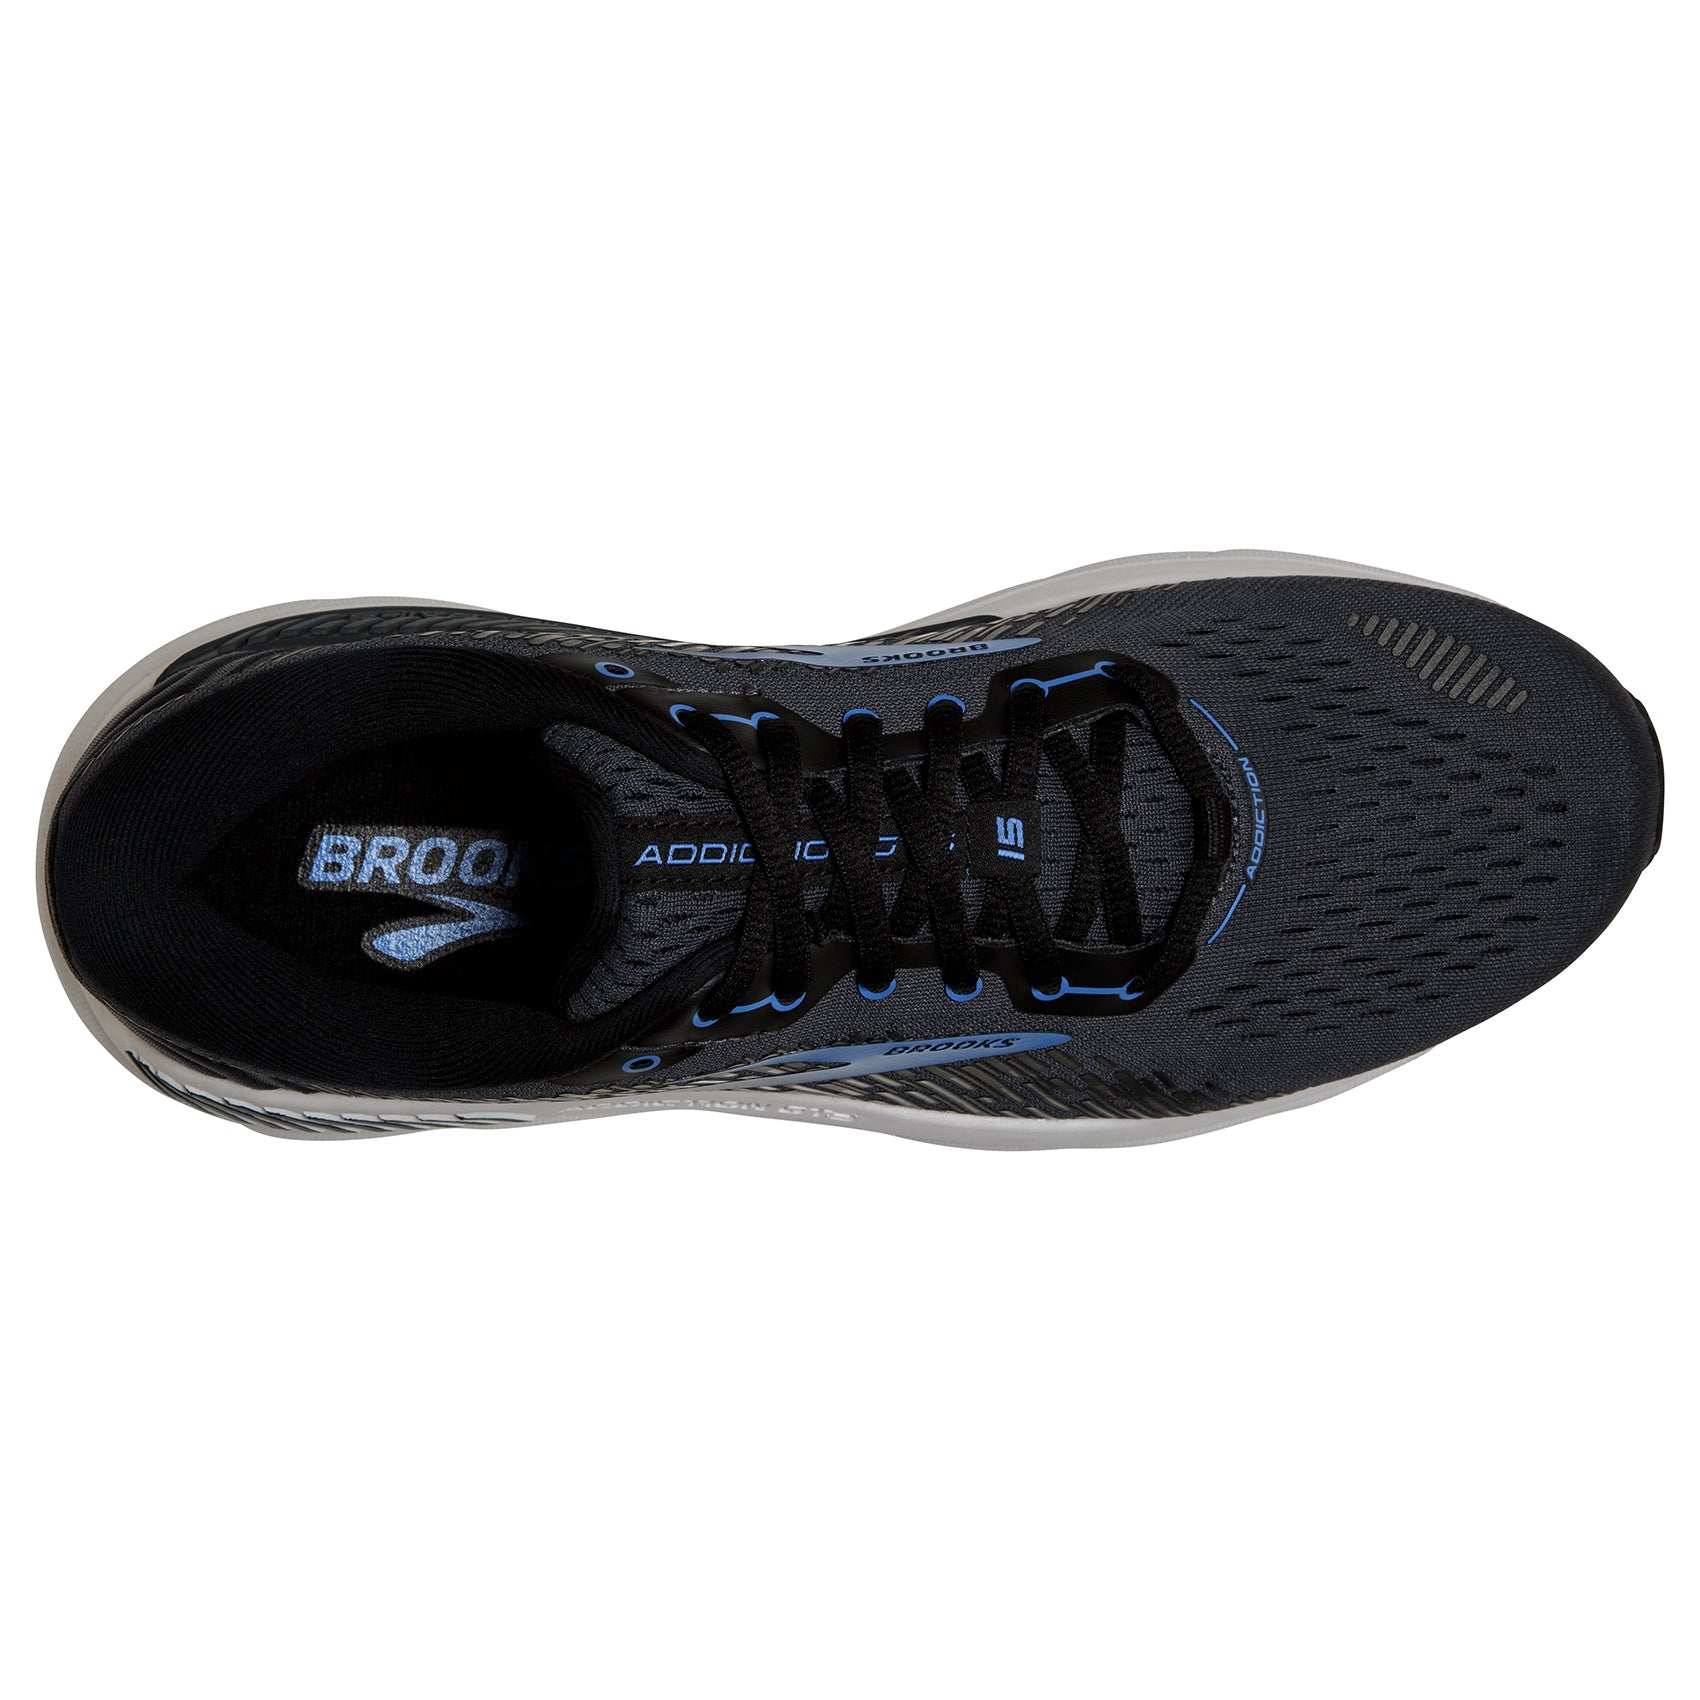 Nike Men's Running Training Shoes, Black Black India